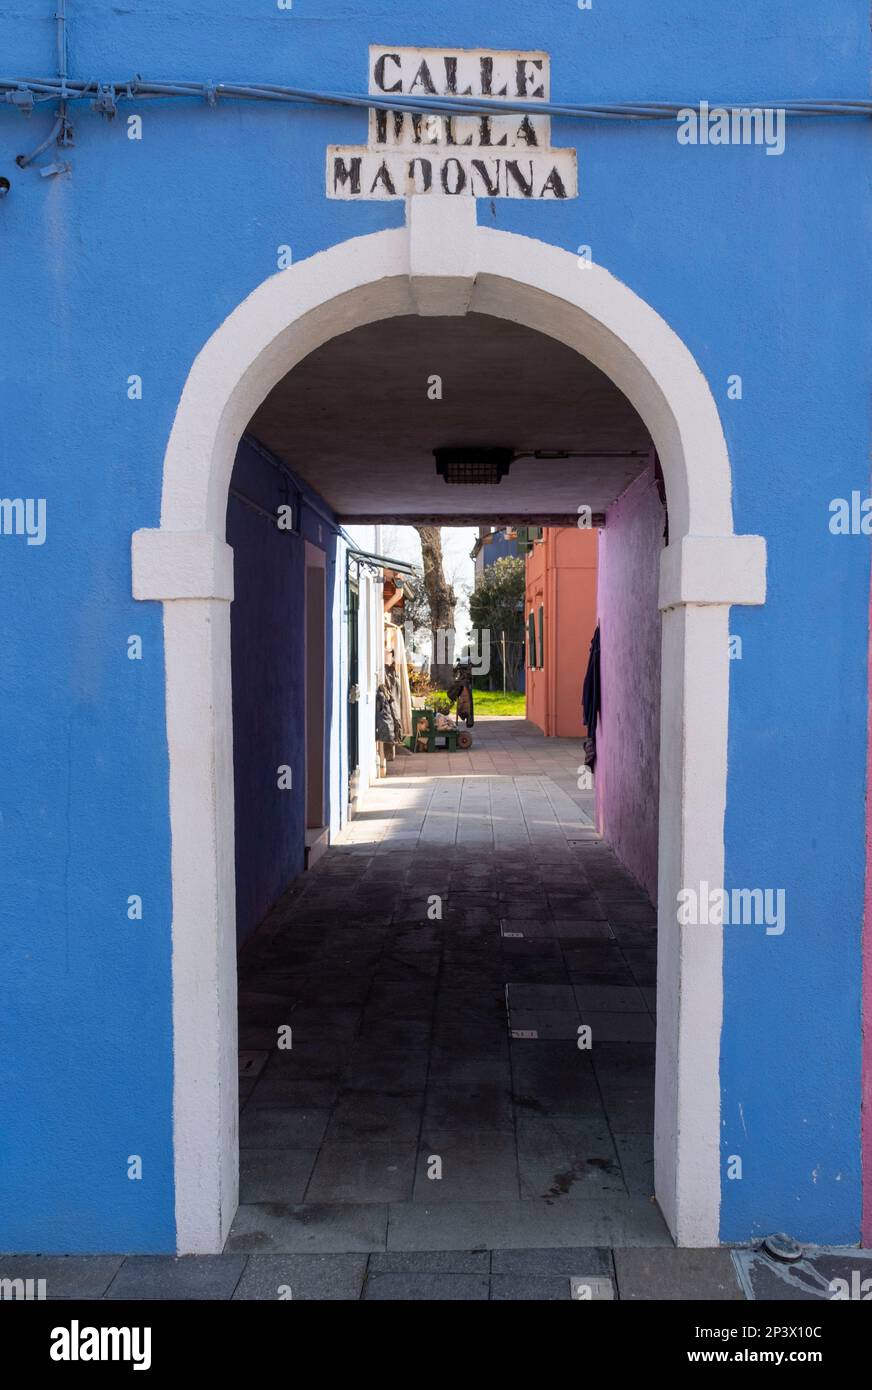 Coloured archway at Calle Del Madonna, Burano, Venice lagoon, Italy Stock Photo